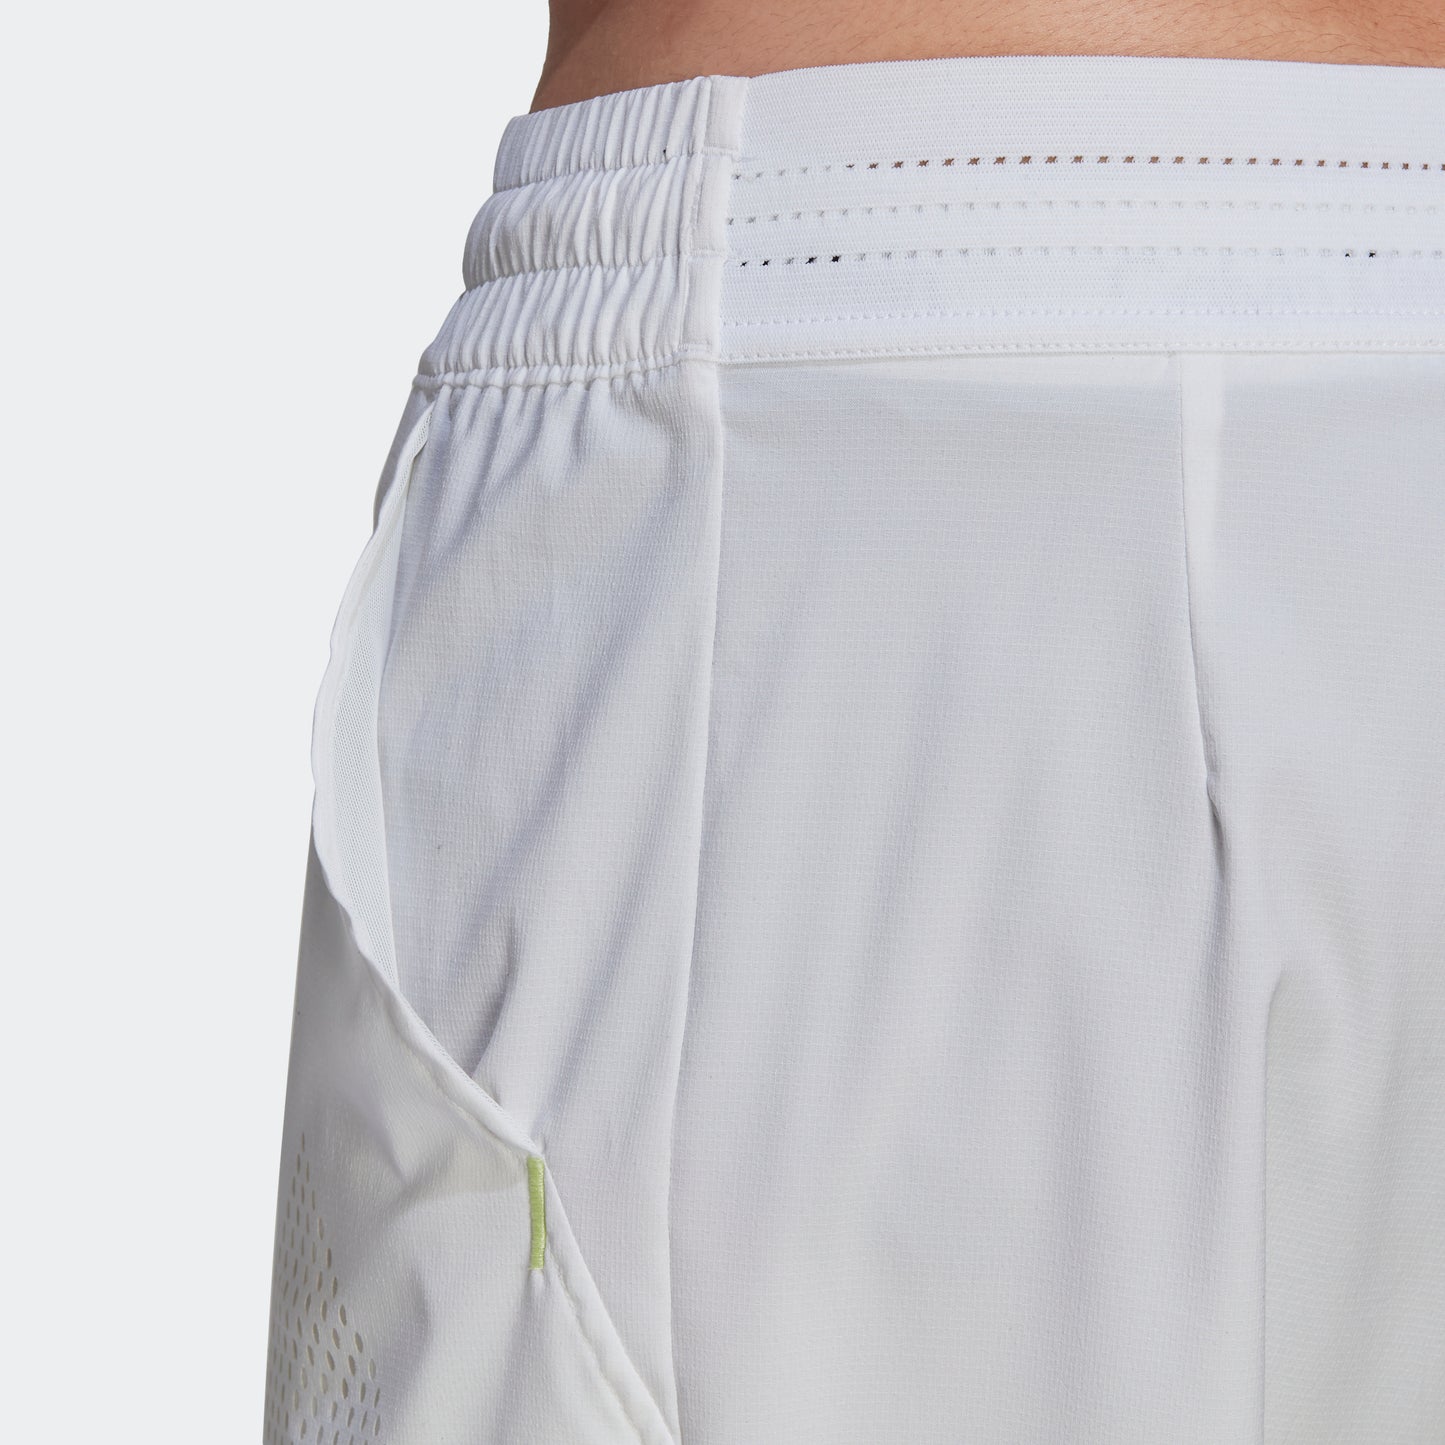 adidas PARIS HEAT.RDY 9-Inch Tennis Shorts | White | Men's